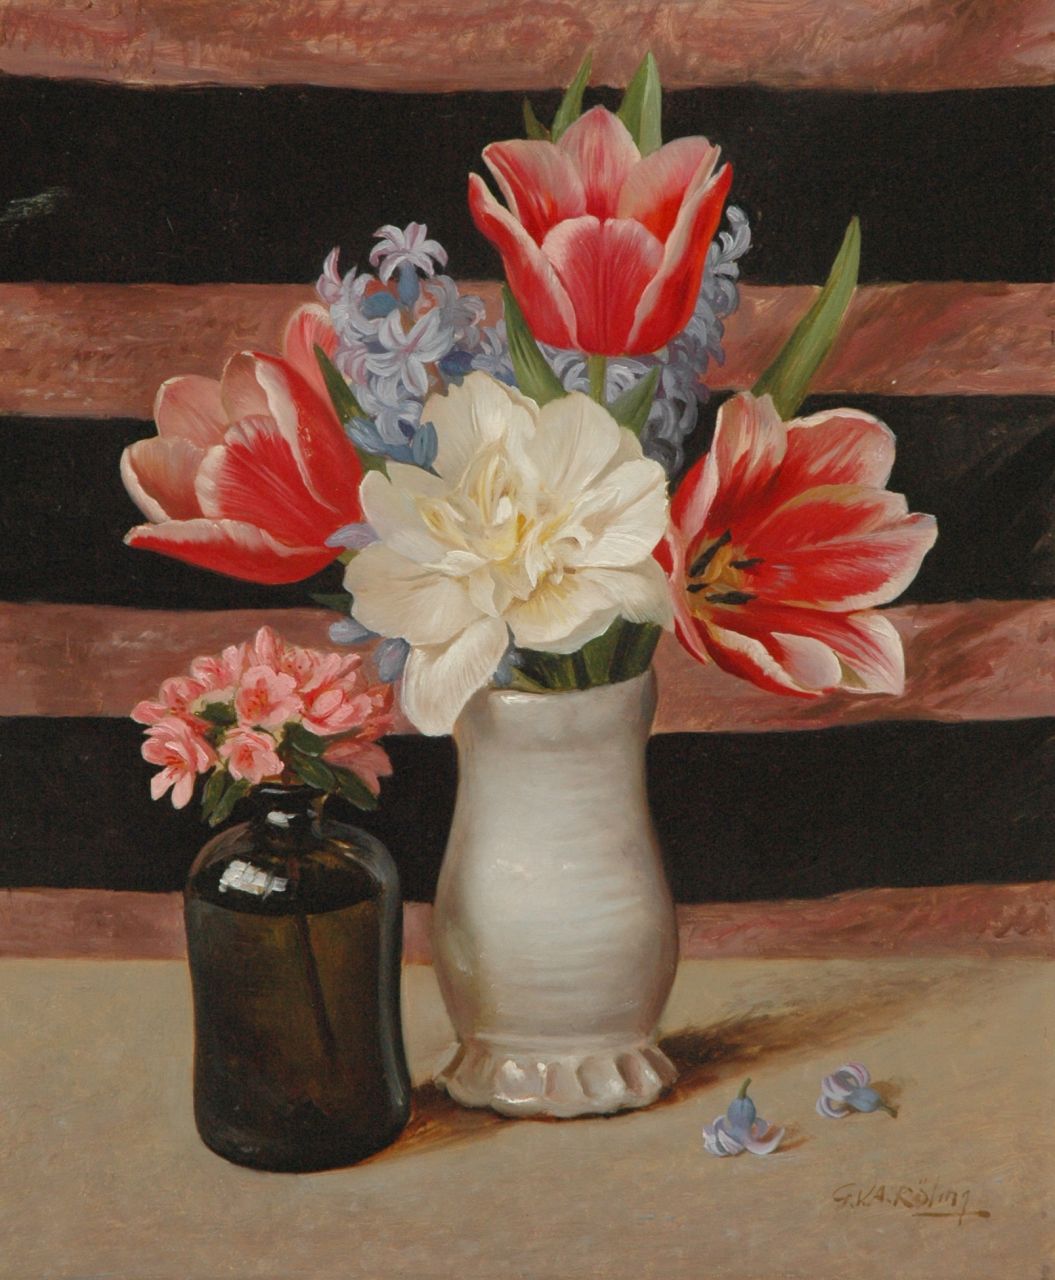 Röling G.V.A.  | Gerard Victor Alphons 'Gé' Röling, Stilleven met tulpen en hyacinten, olieverf op board 45,6 x 37,7 cm, gesigneerd rechtsonder